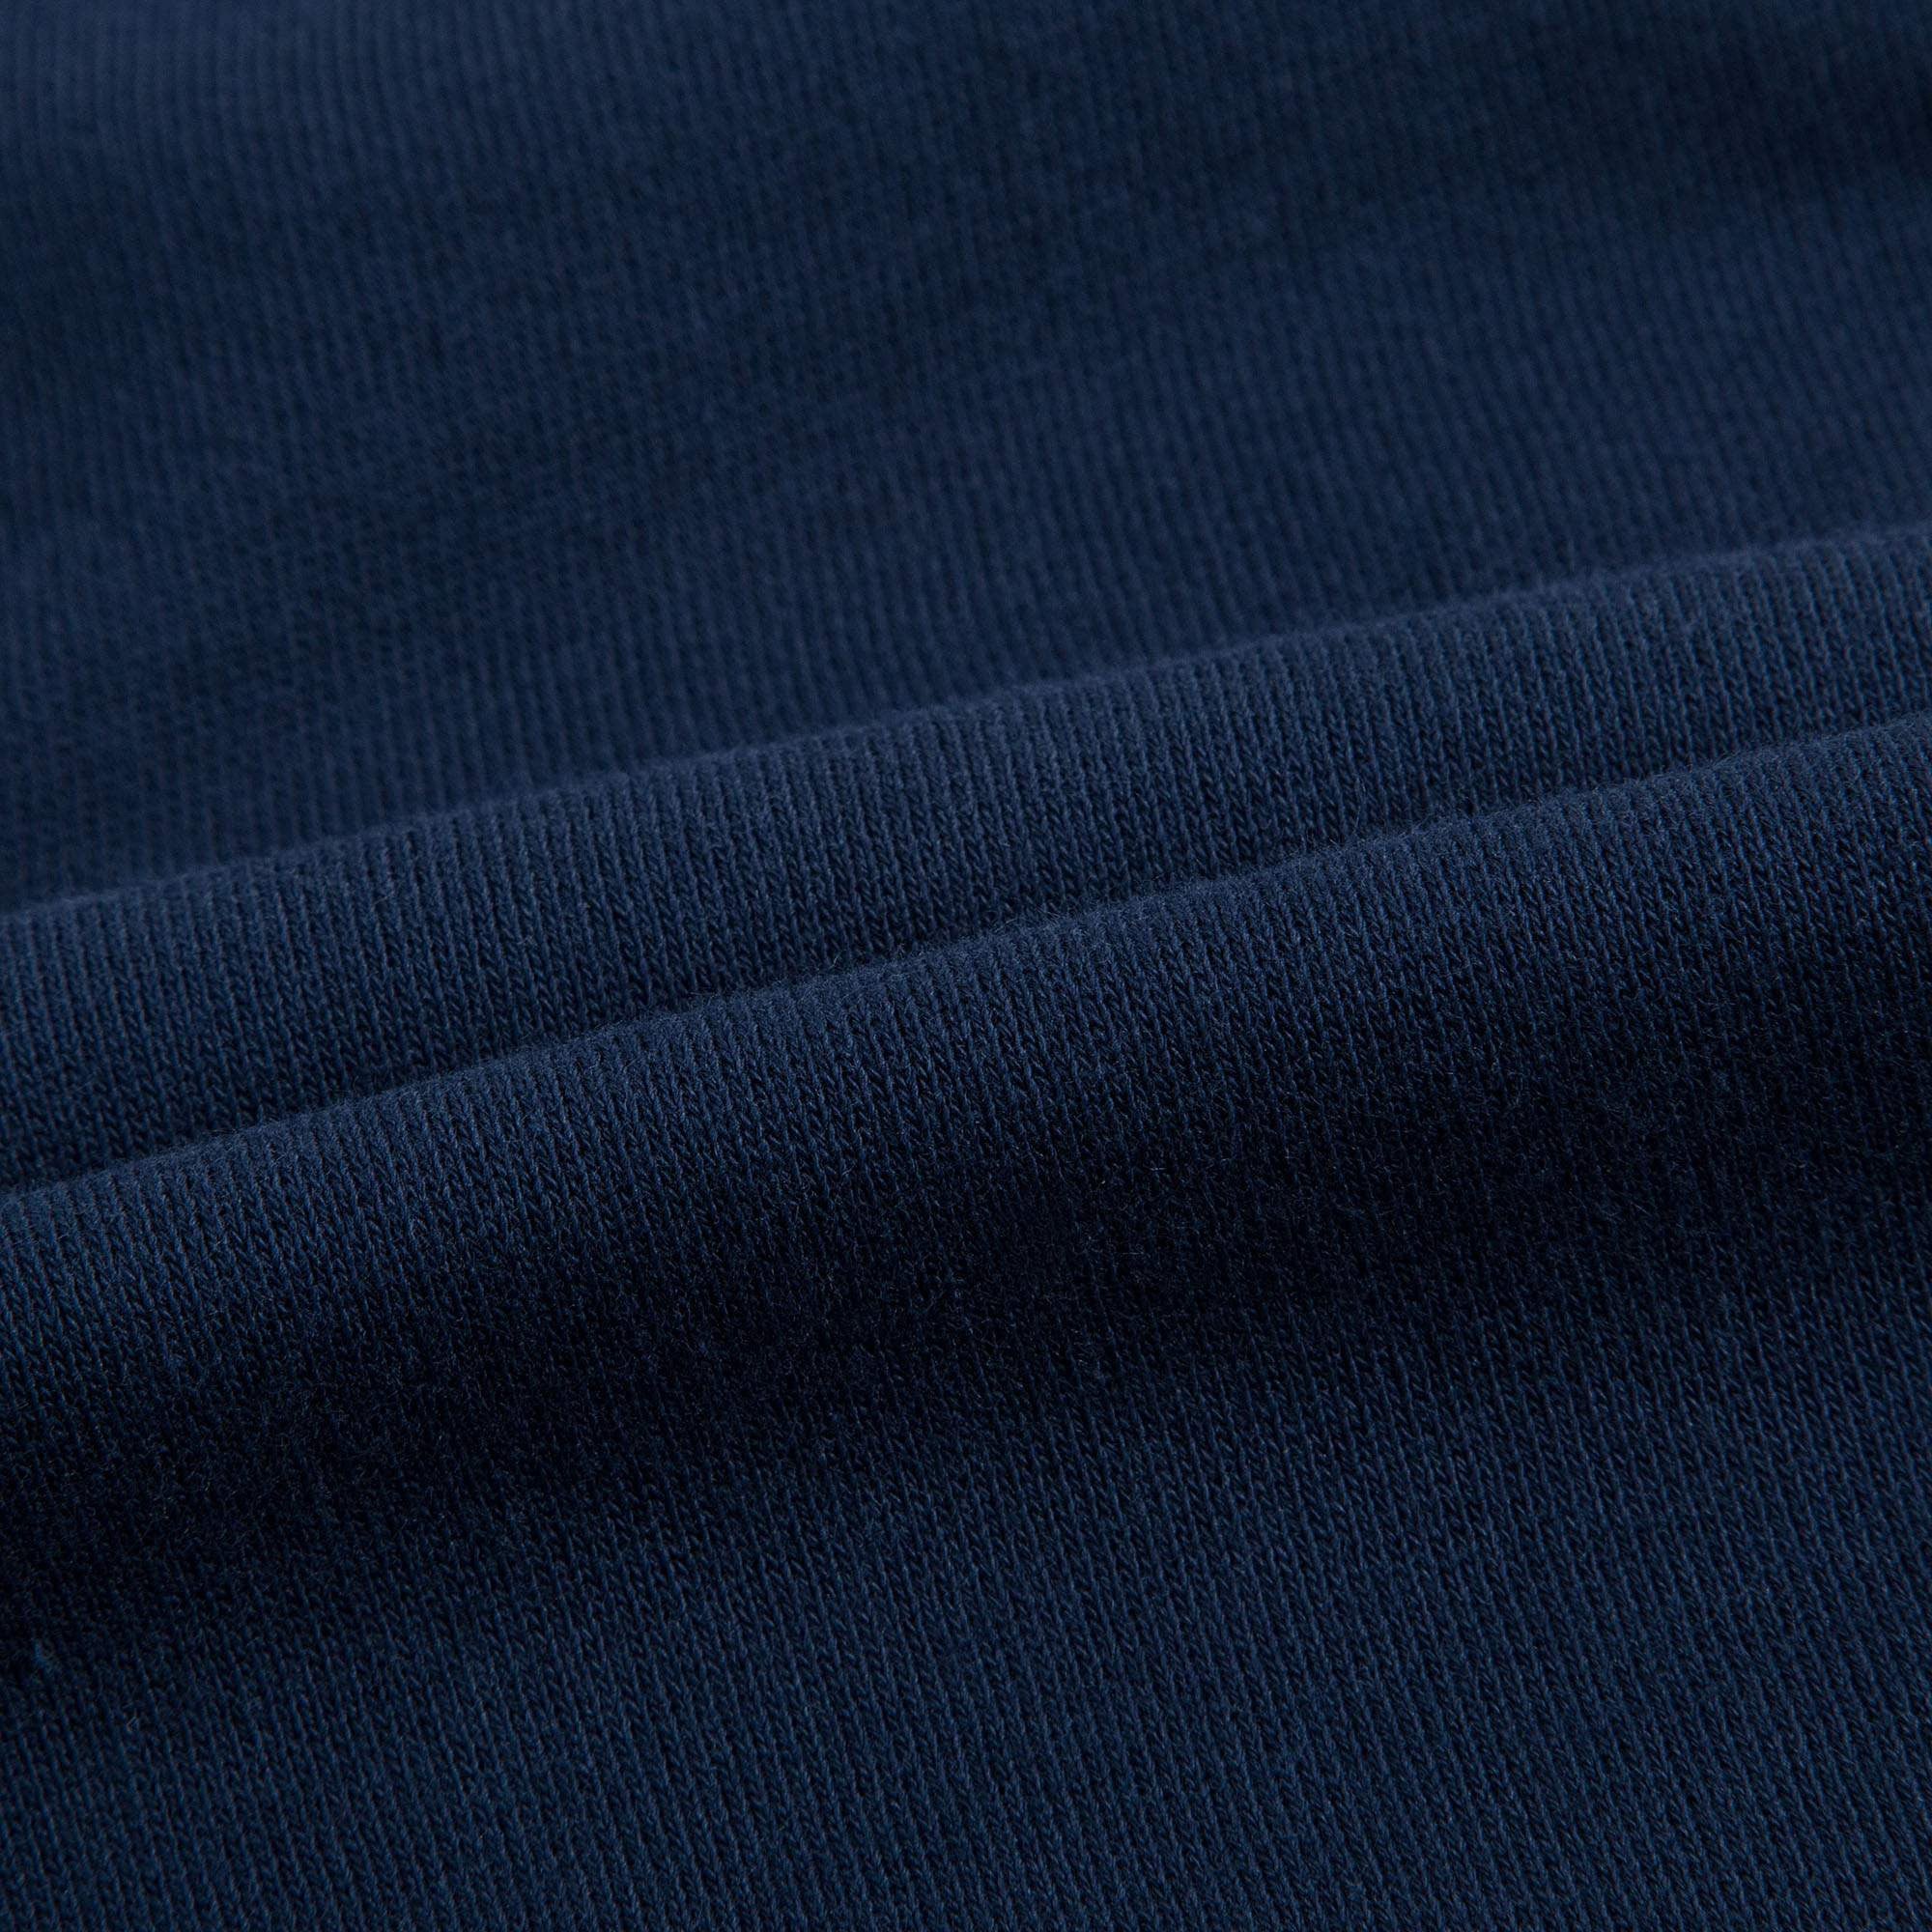 Girls Navy Blue Logo Sweatshirt